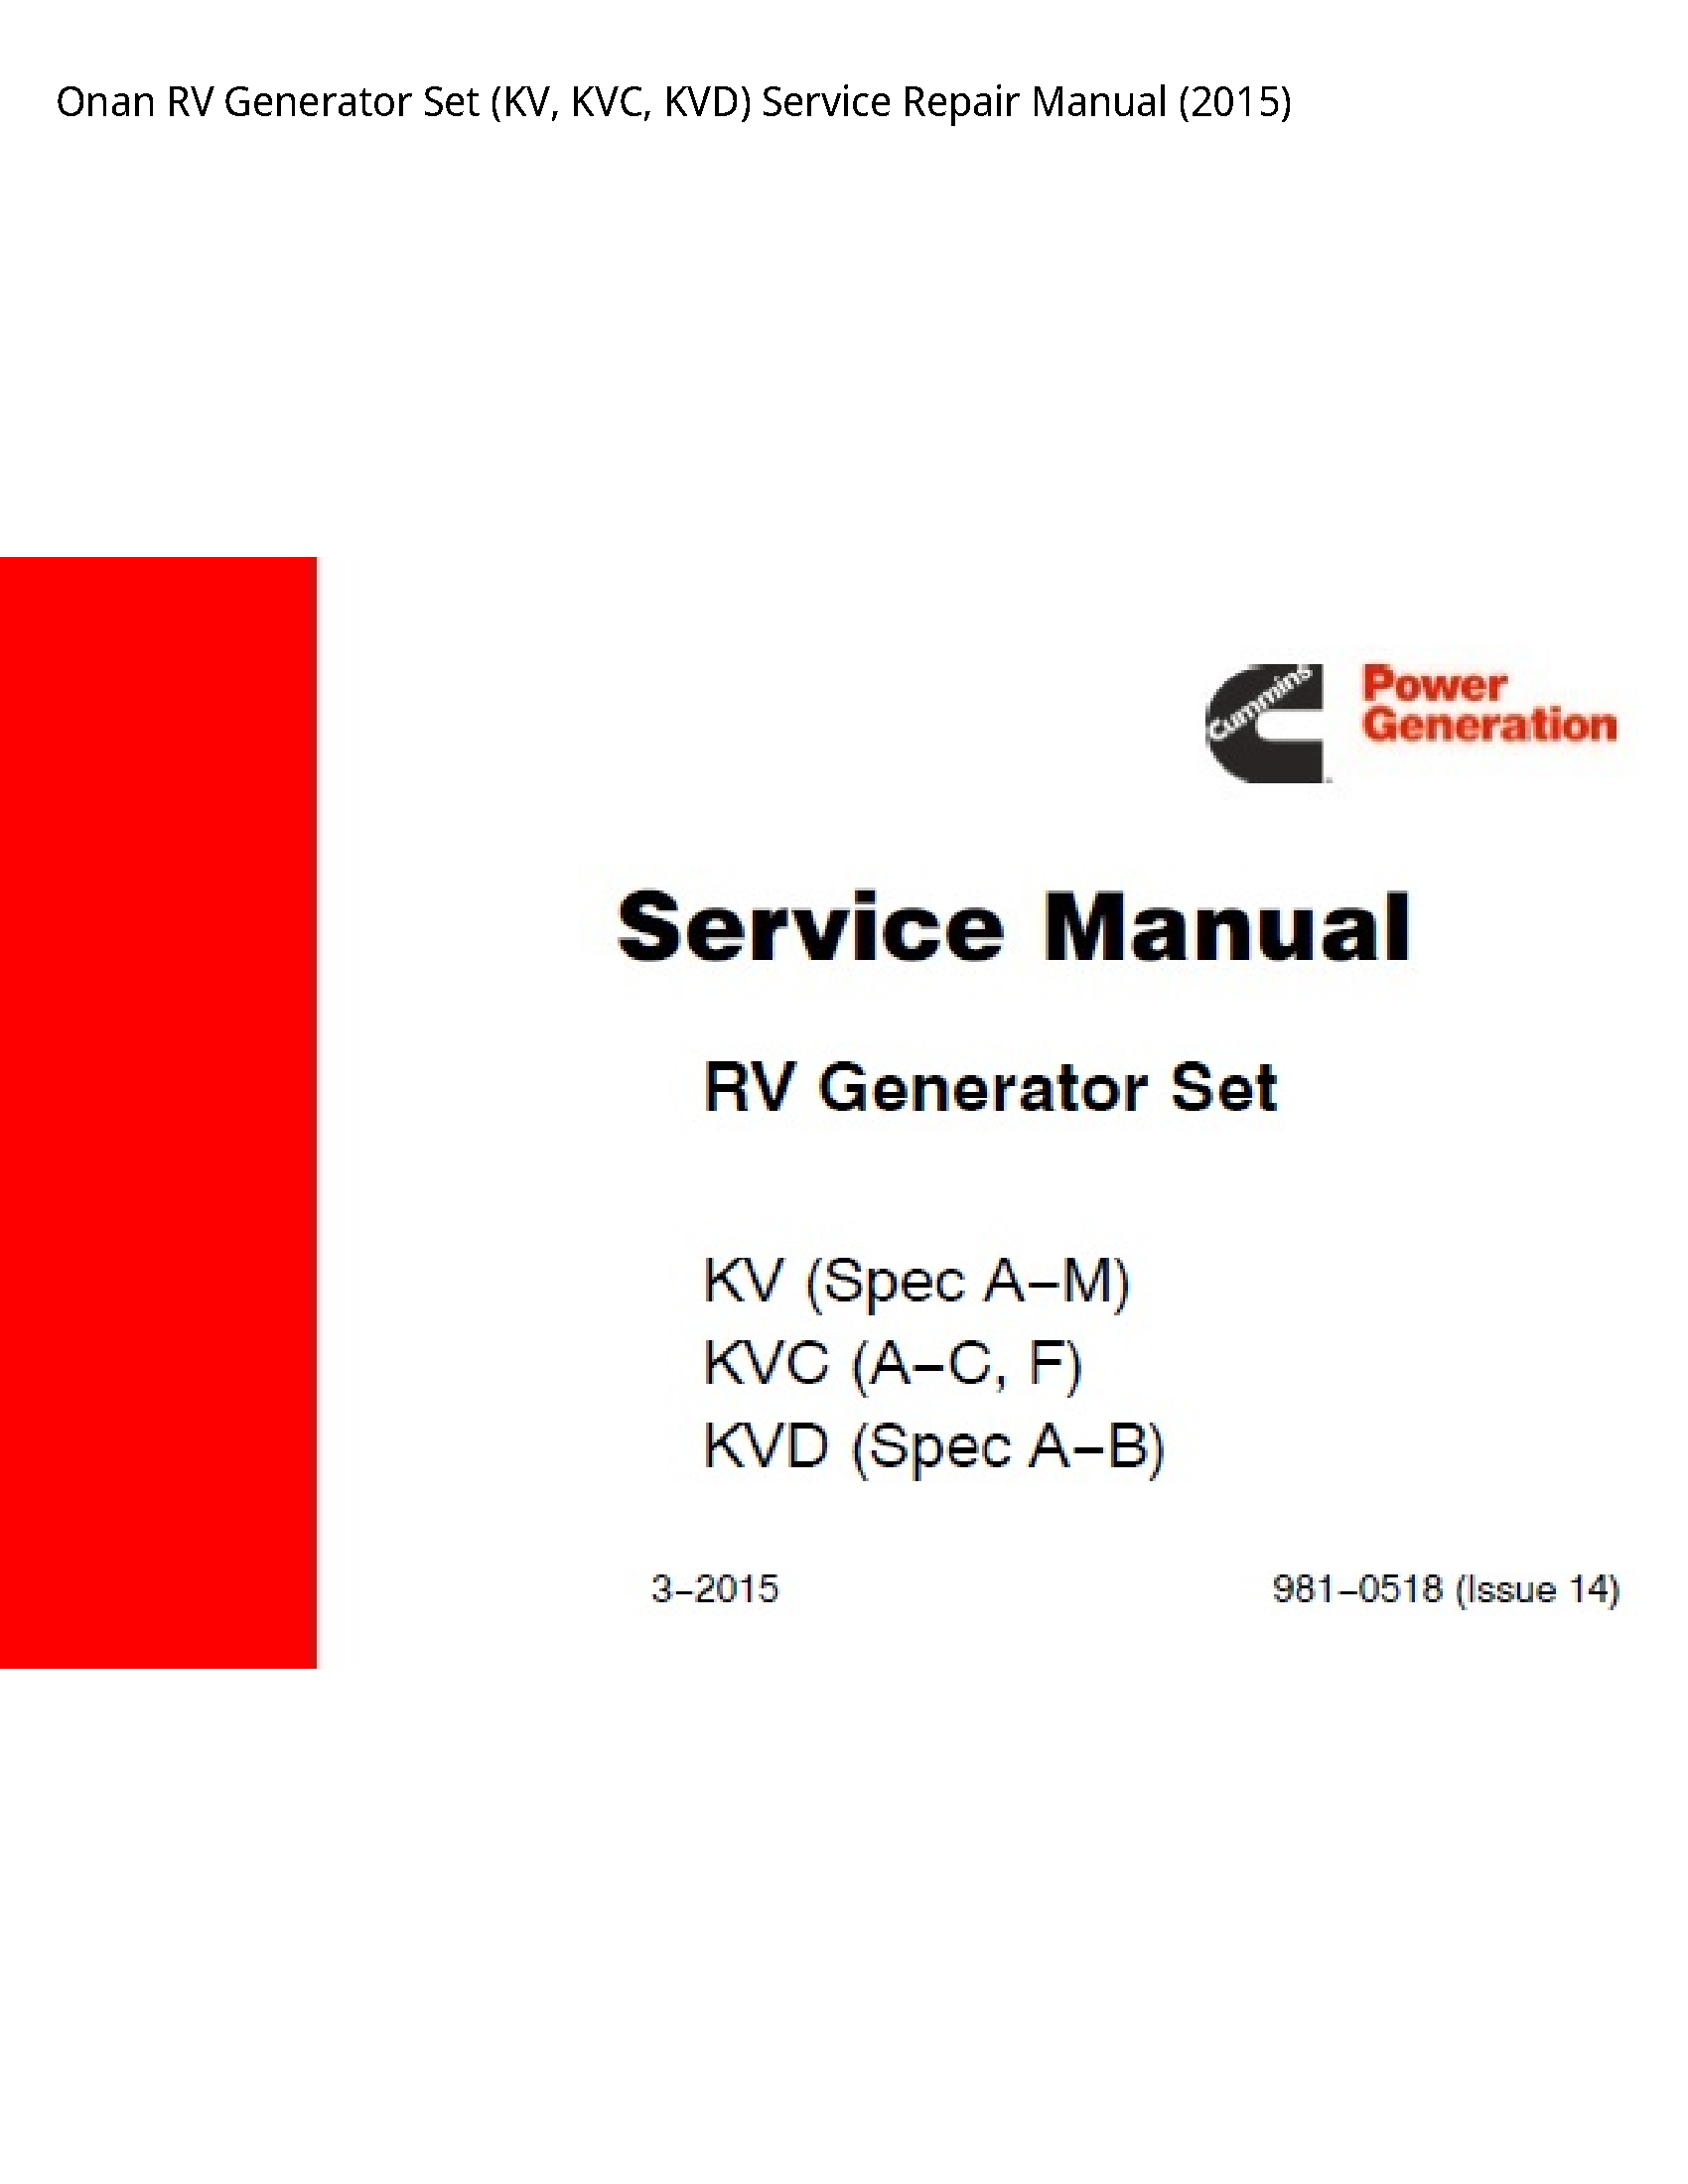 Onan RV Generator Set (KV manual